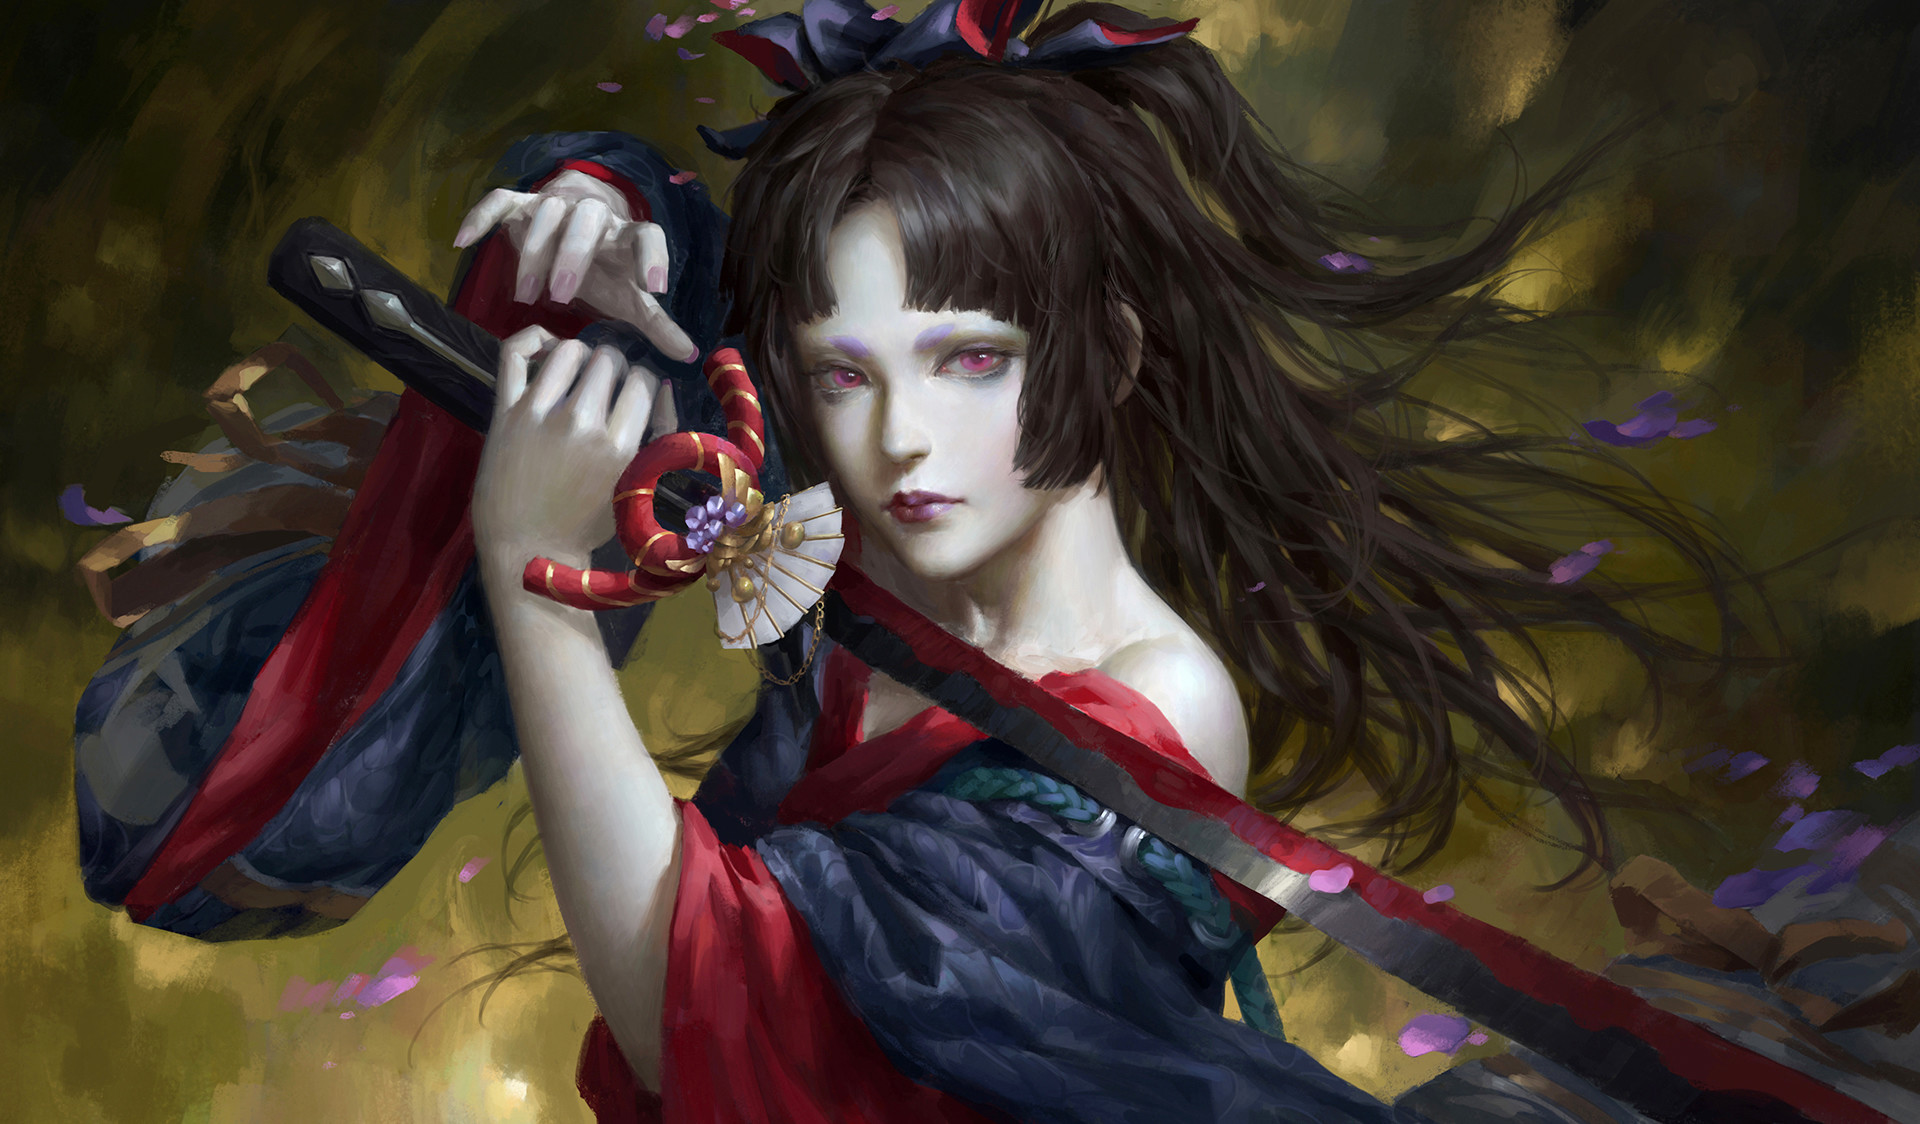 Anime Warrior Girl by BuChuo Liu